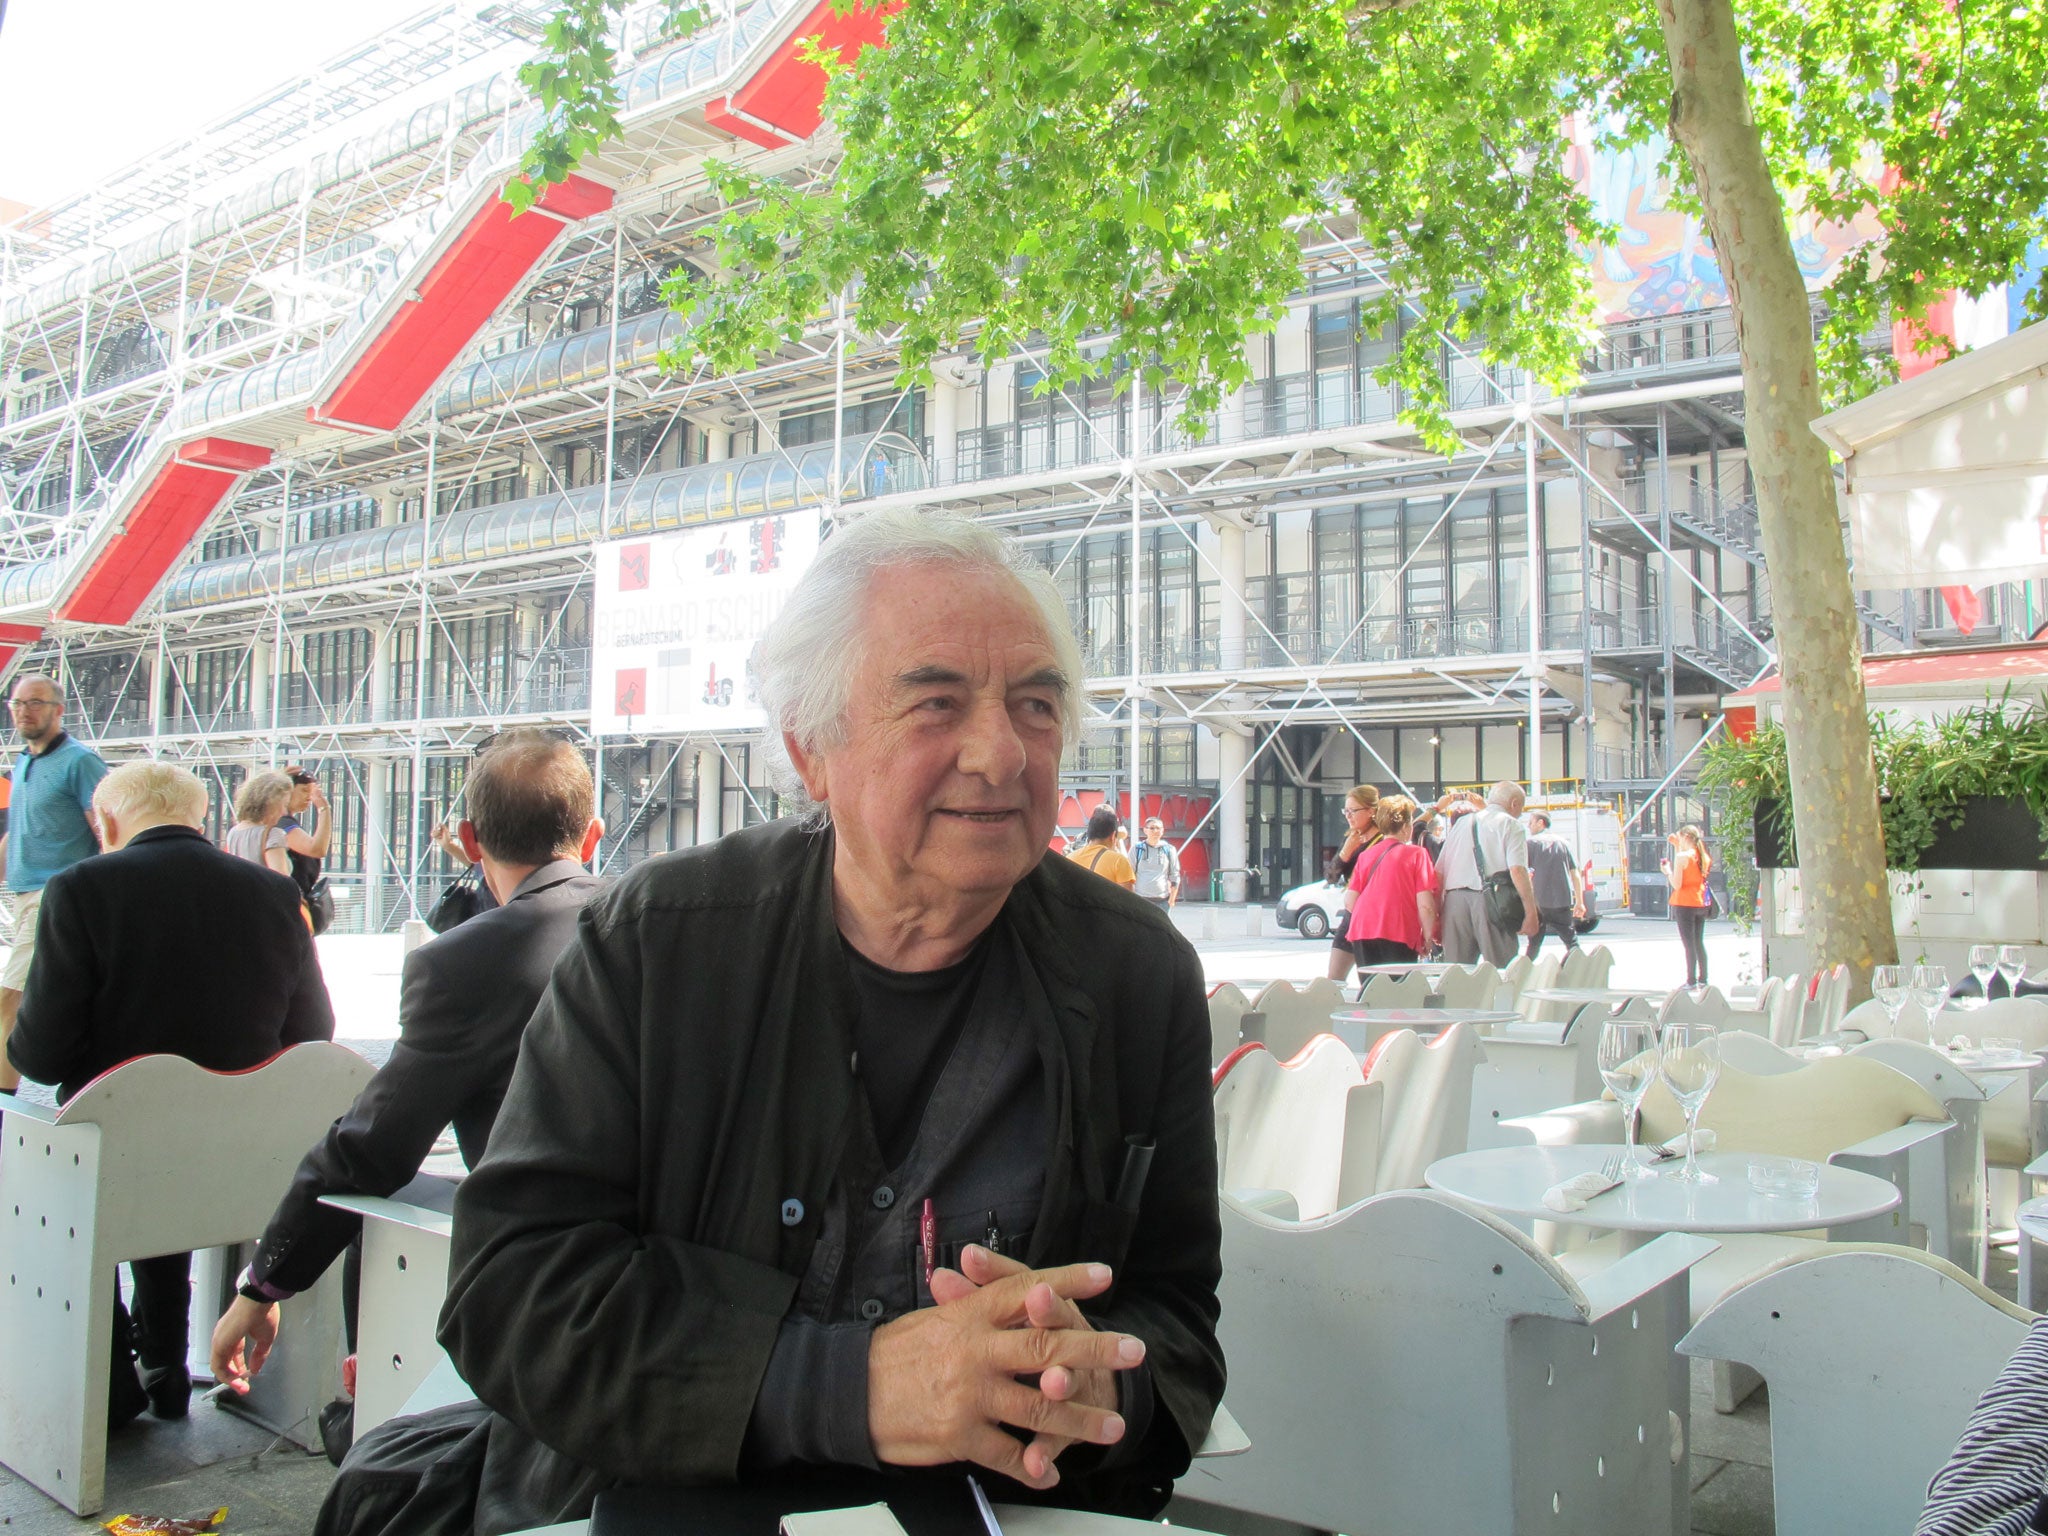 His studio is the world: Daniel Buren outside the Pompidou Centre in Paris